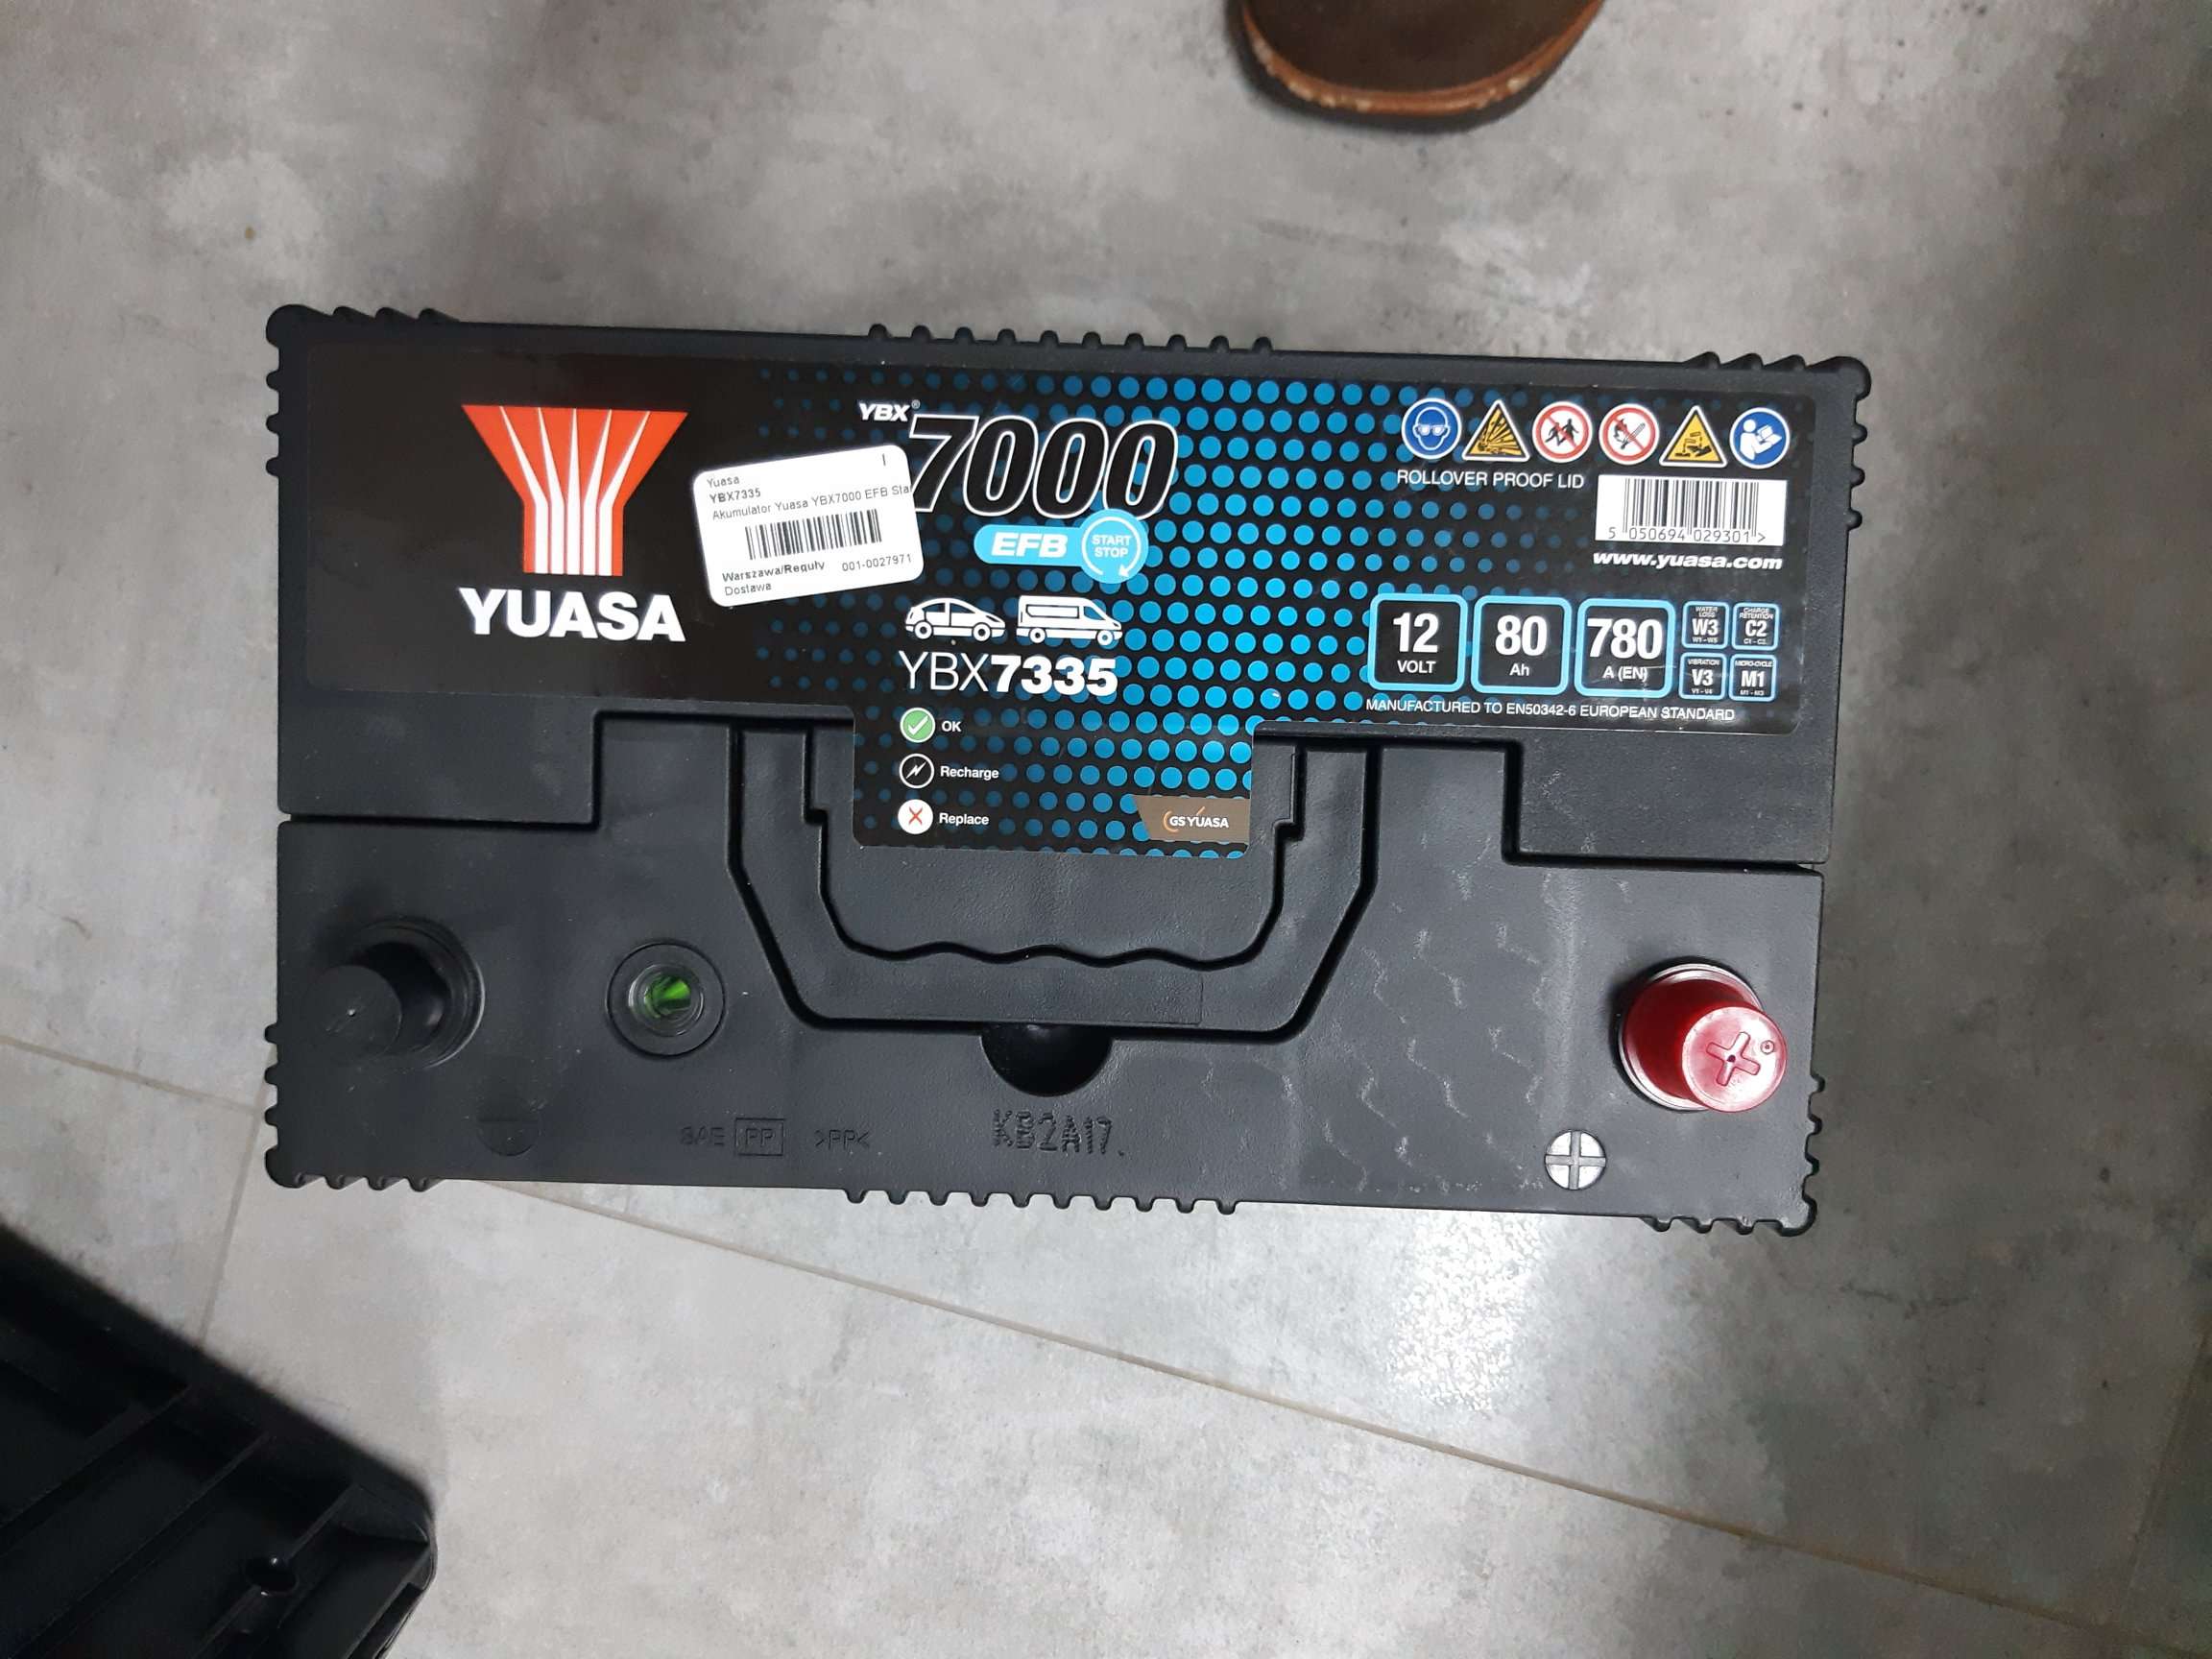 Yuasa YBX7000 EFB Start Stop Plus Batteries, Batterie